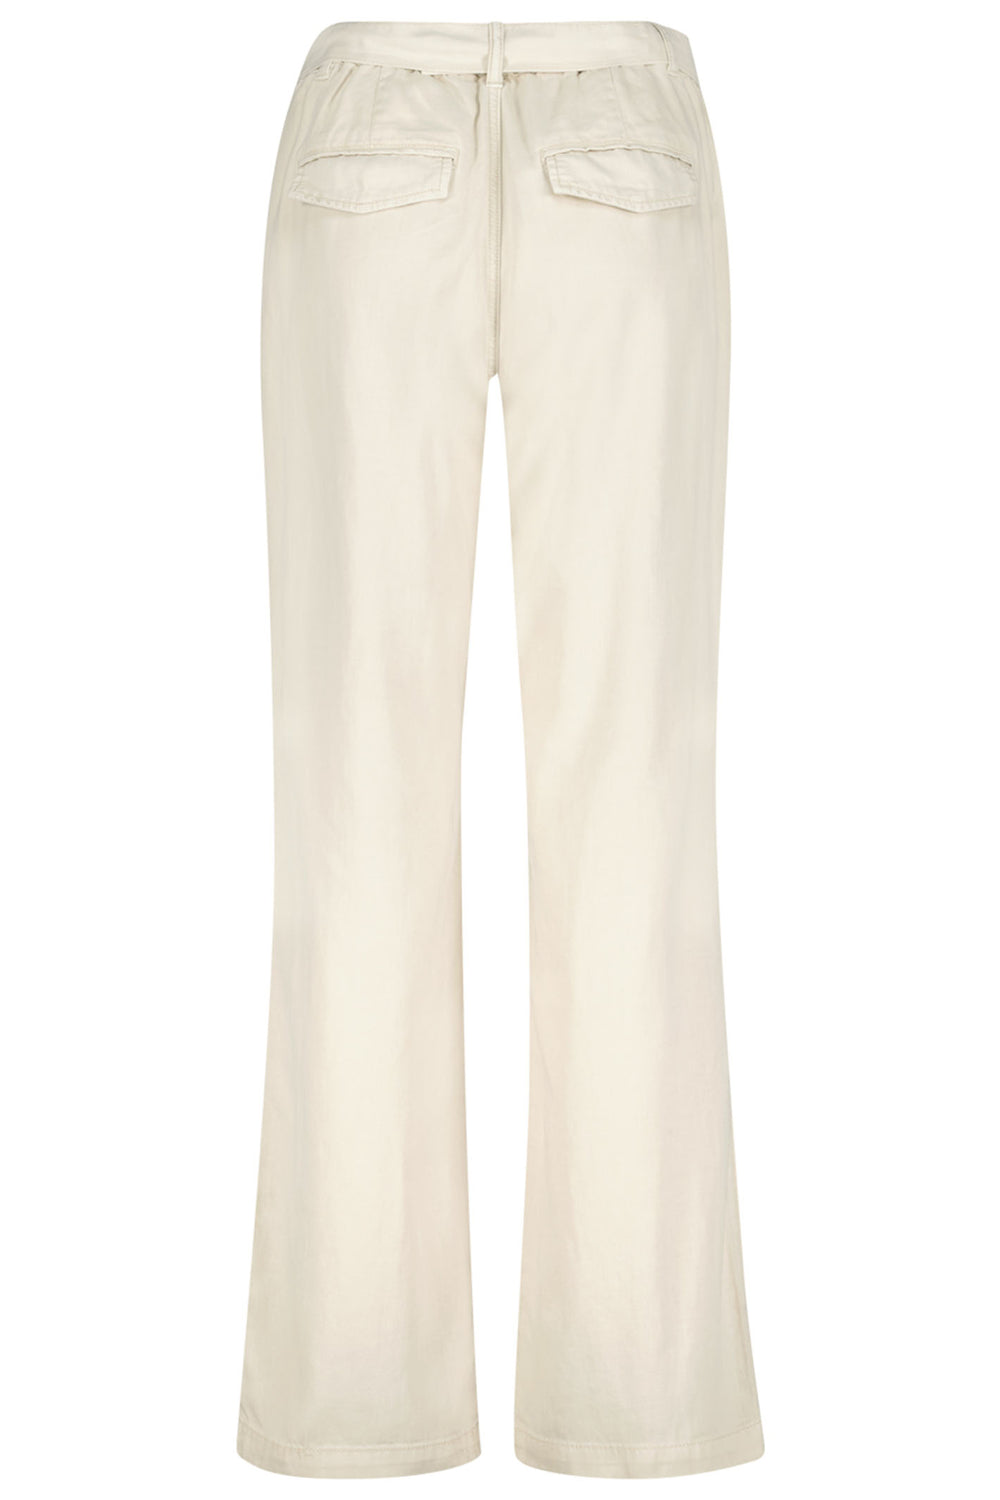 Red Button SRB4169A Colette Pearl Cream Cotton Linen Trousers 69cm - Olivia Grace Fashion